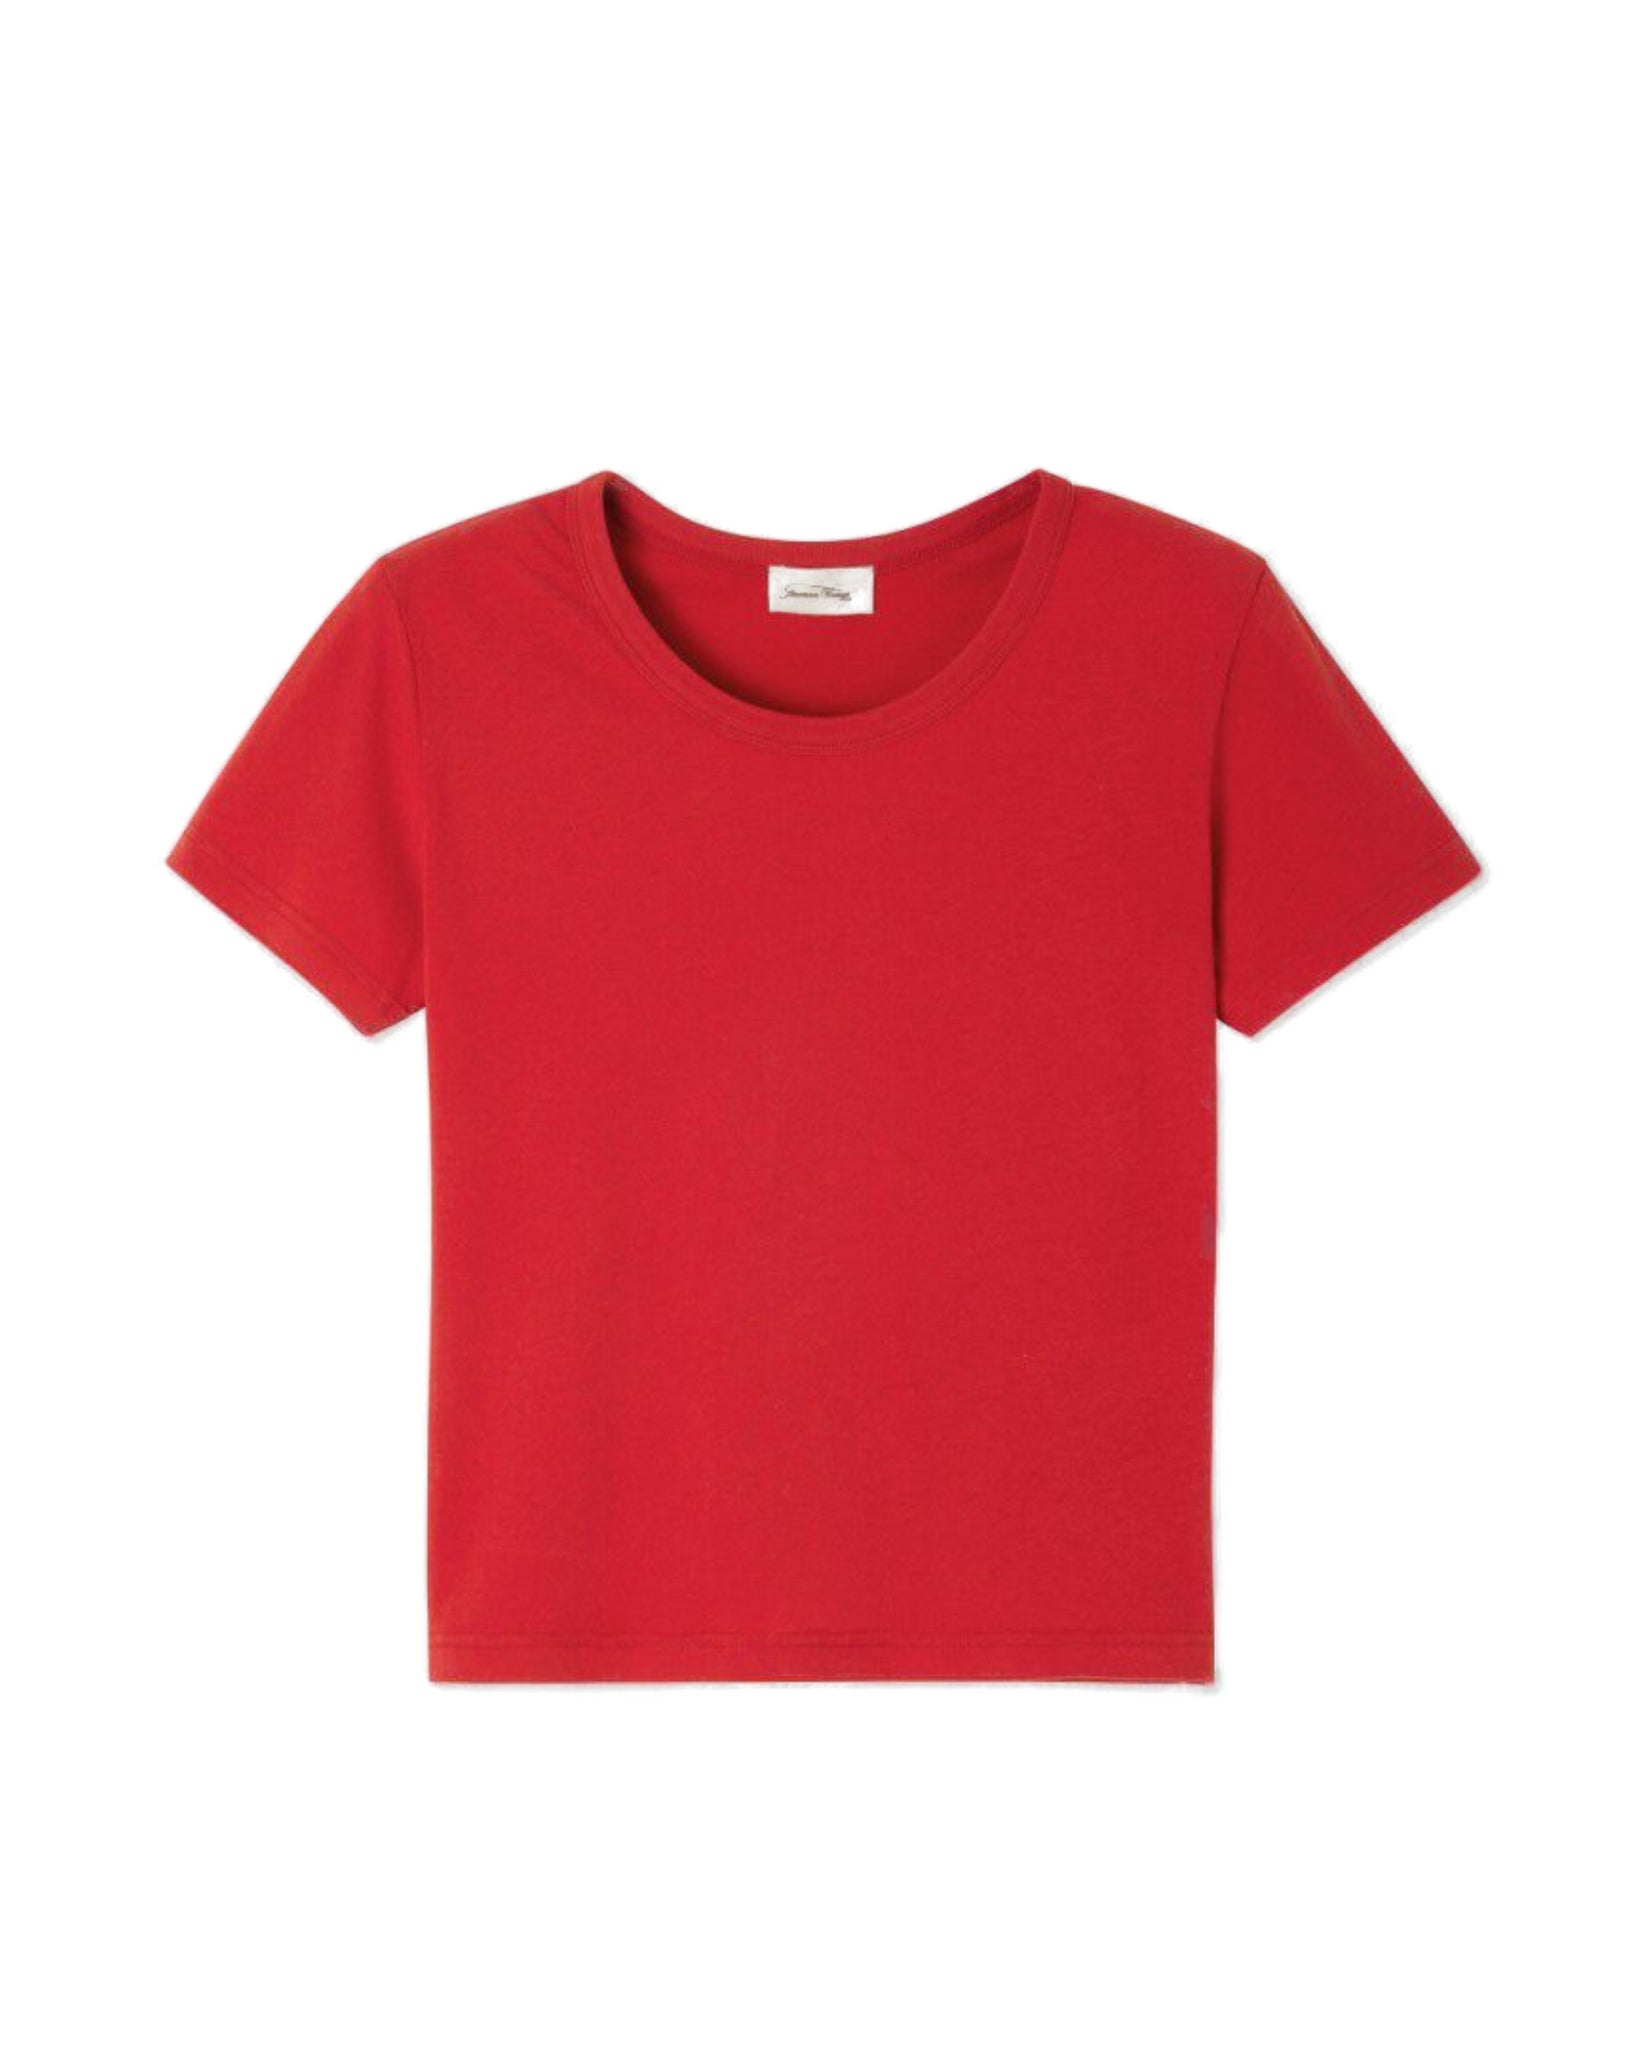 Gamipy T-Shirt - Poivron